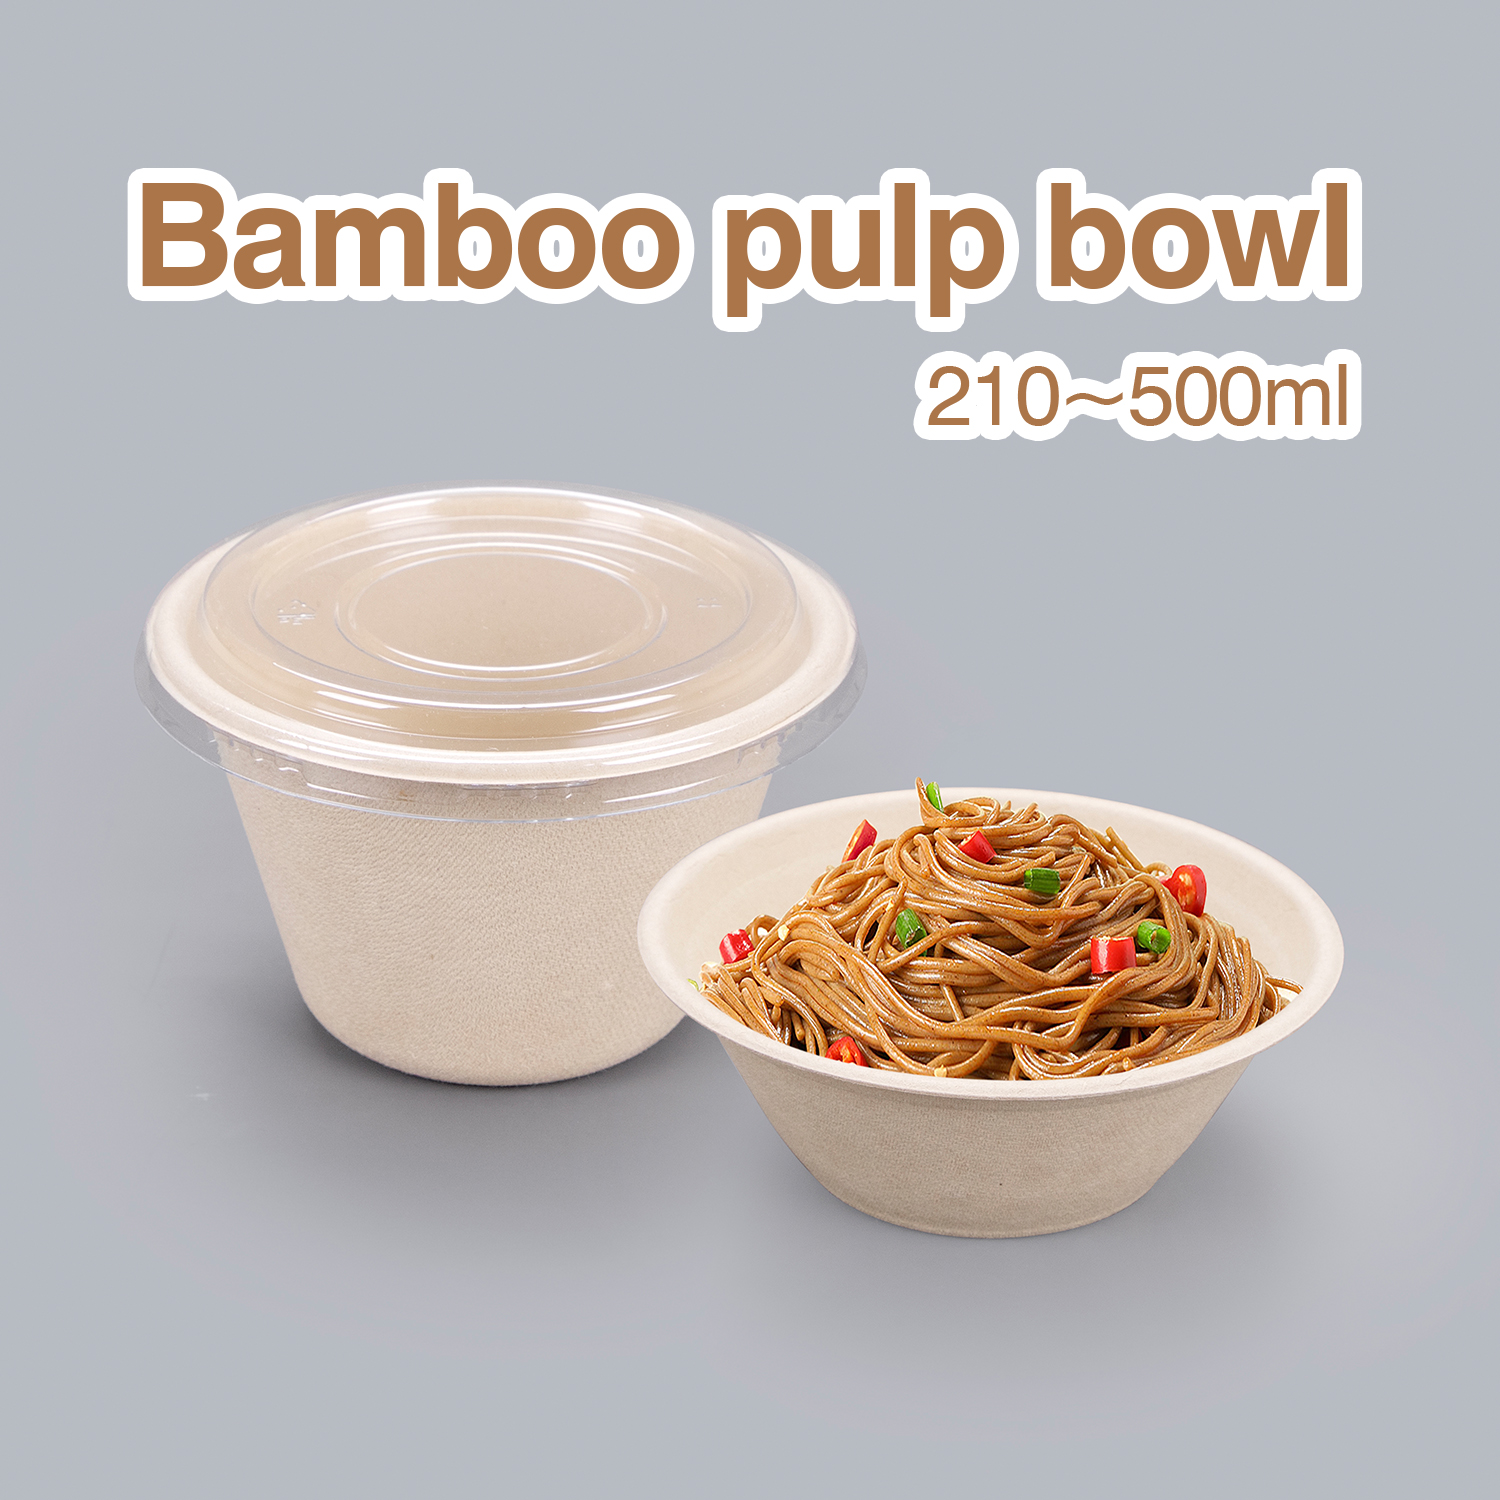 Disposable paper bowl, bamboo pulp pulp bowl, salad bowl, snack dessert bowl, party picnic bowl